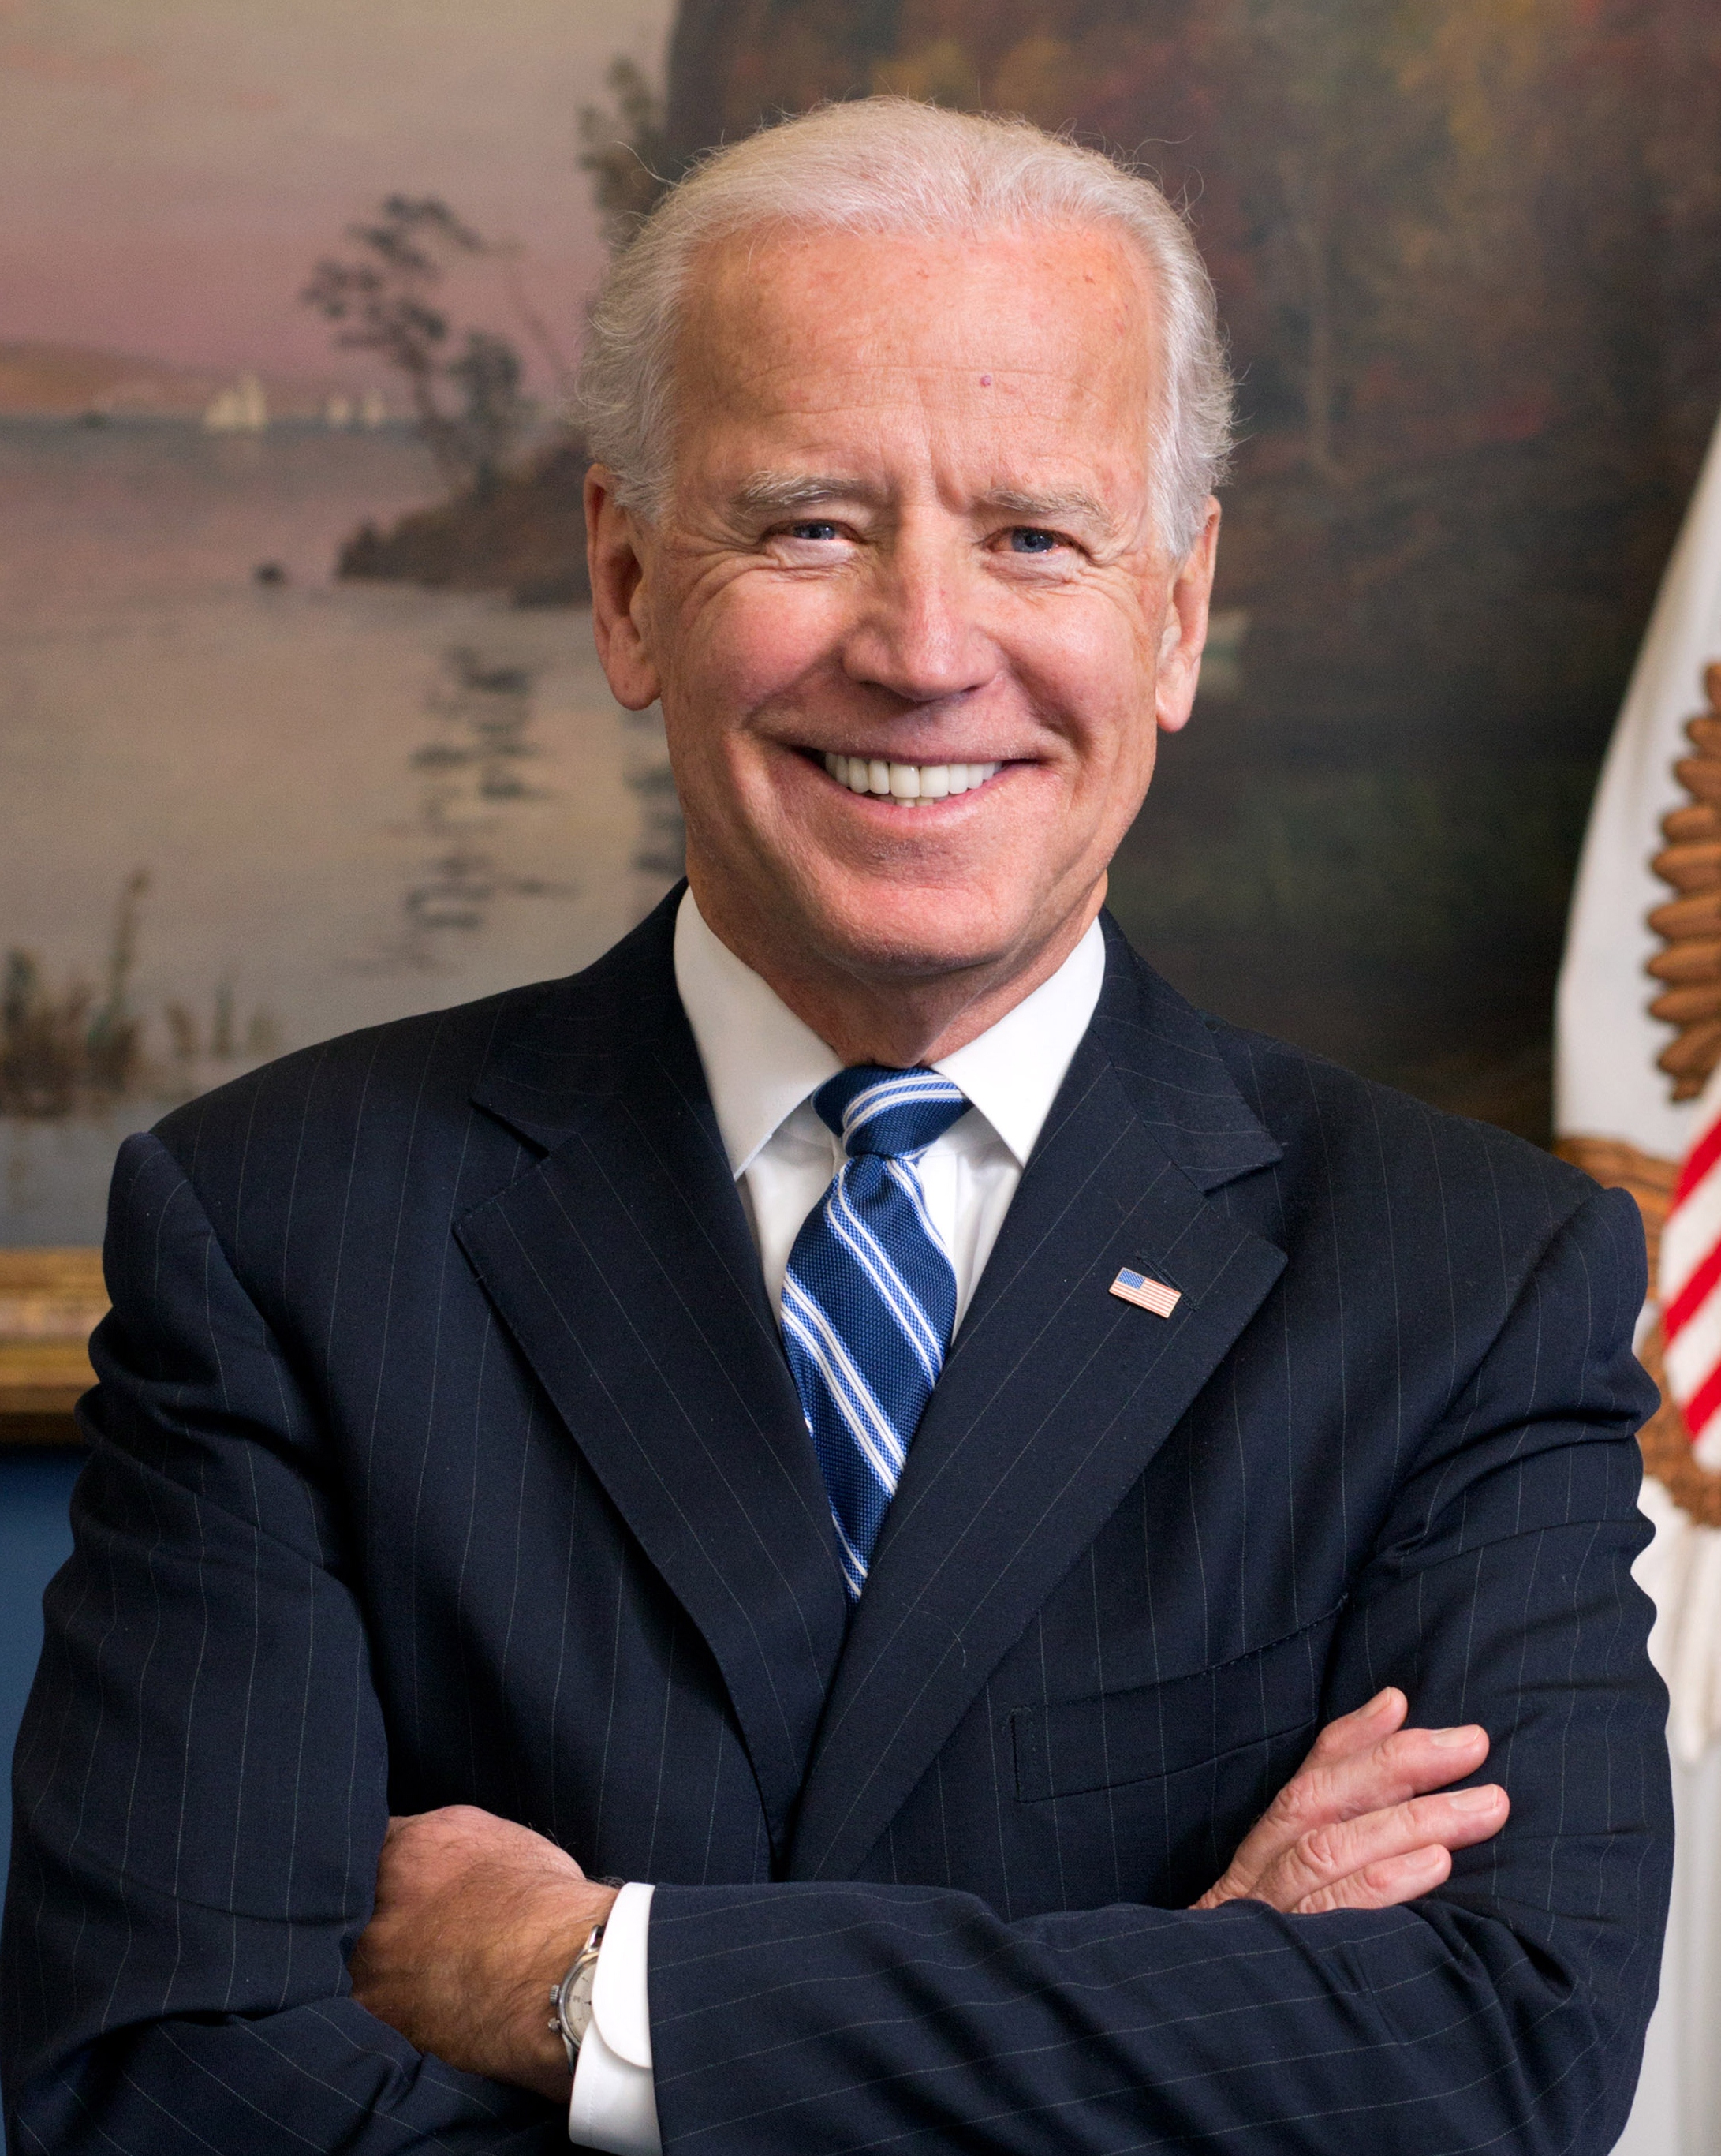 Statement of President Joe Biden on the Senate Vote on Voting Rights